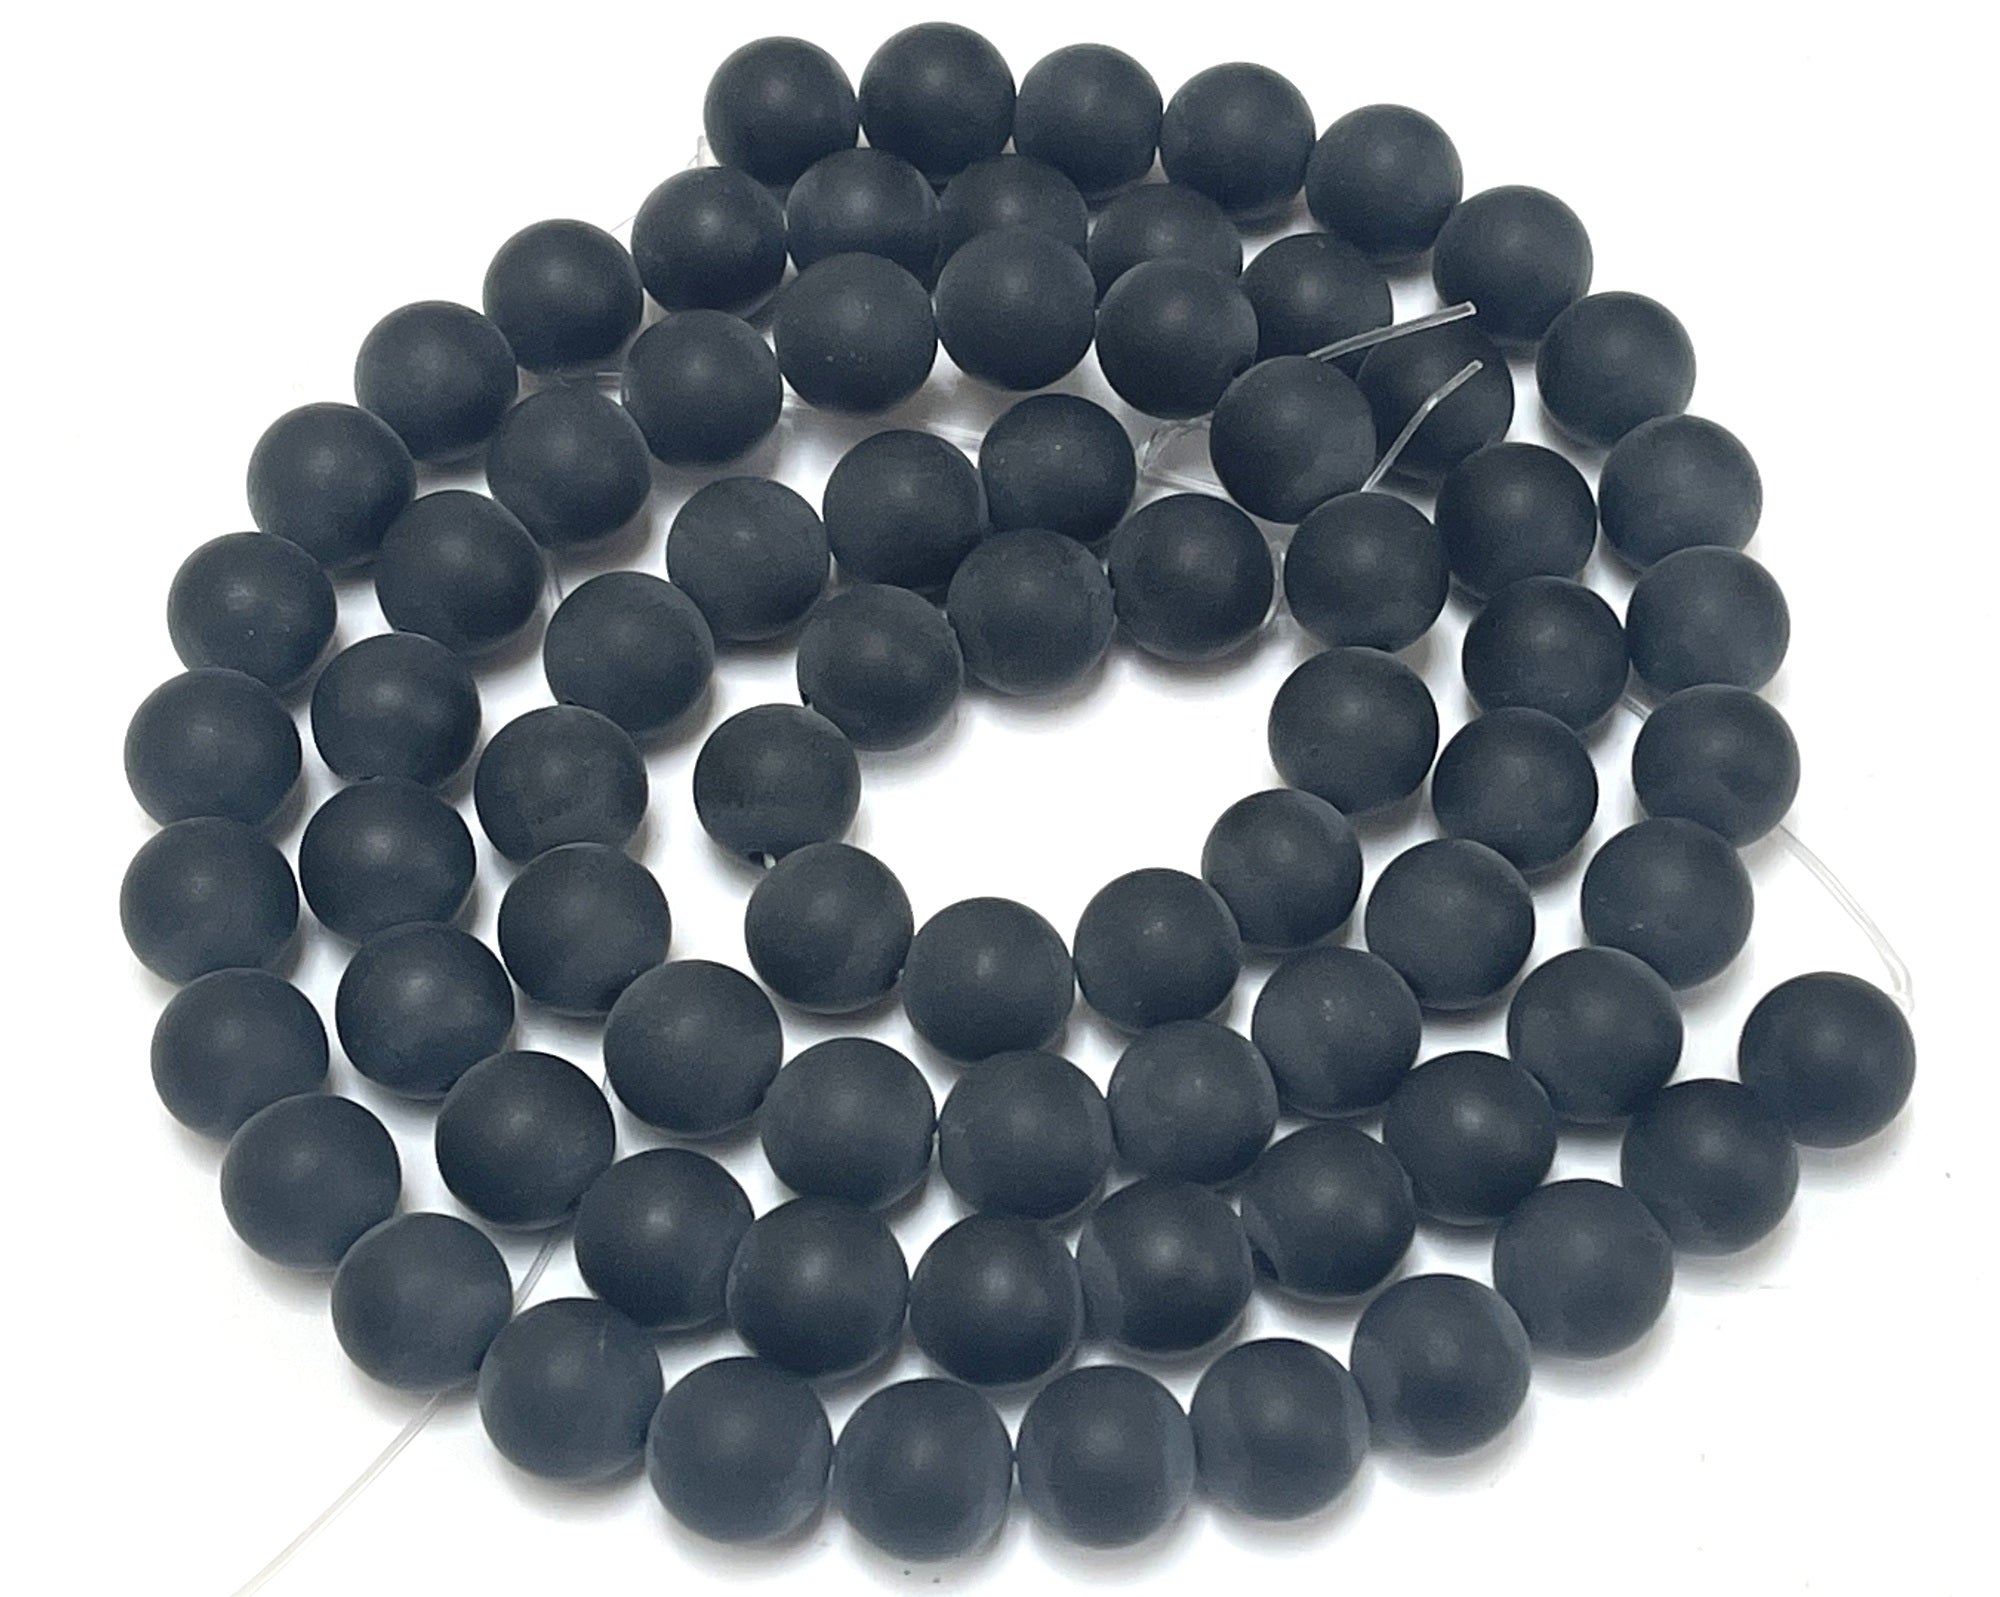 Black Onyx matte 10mm round gemstone beads 15" strand